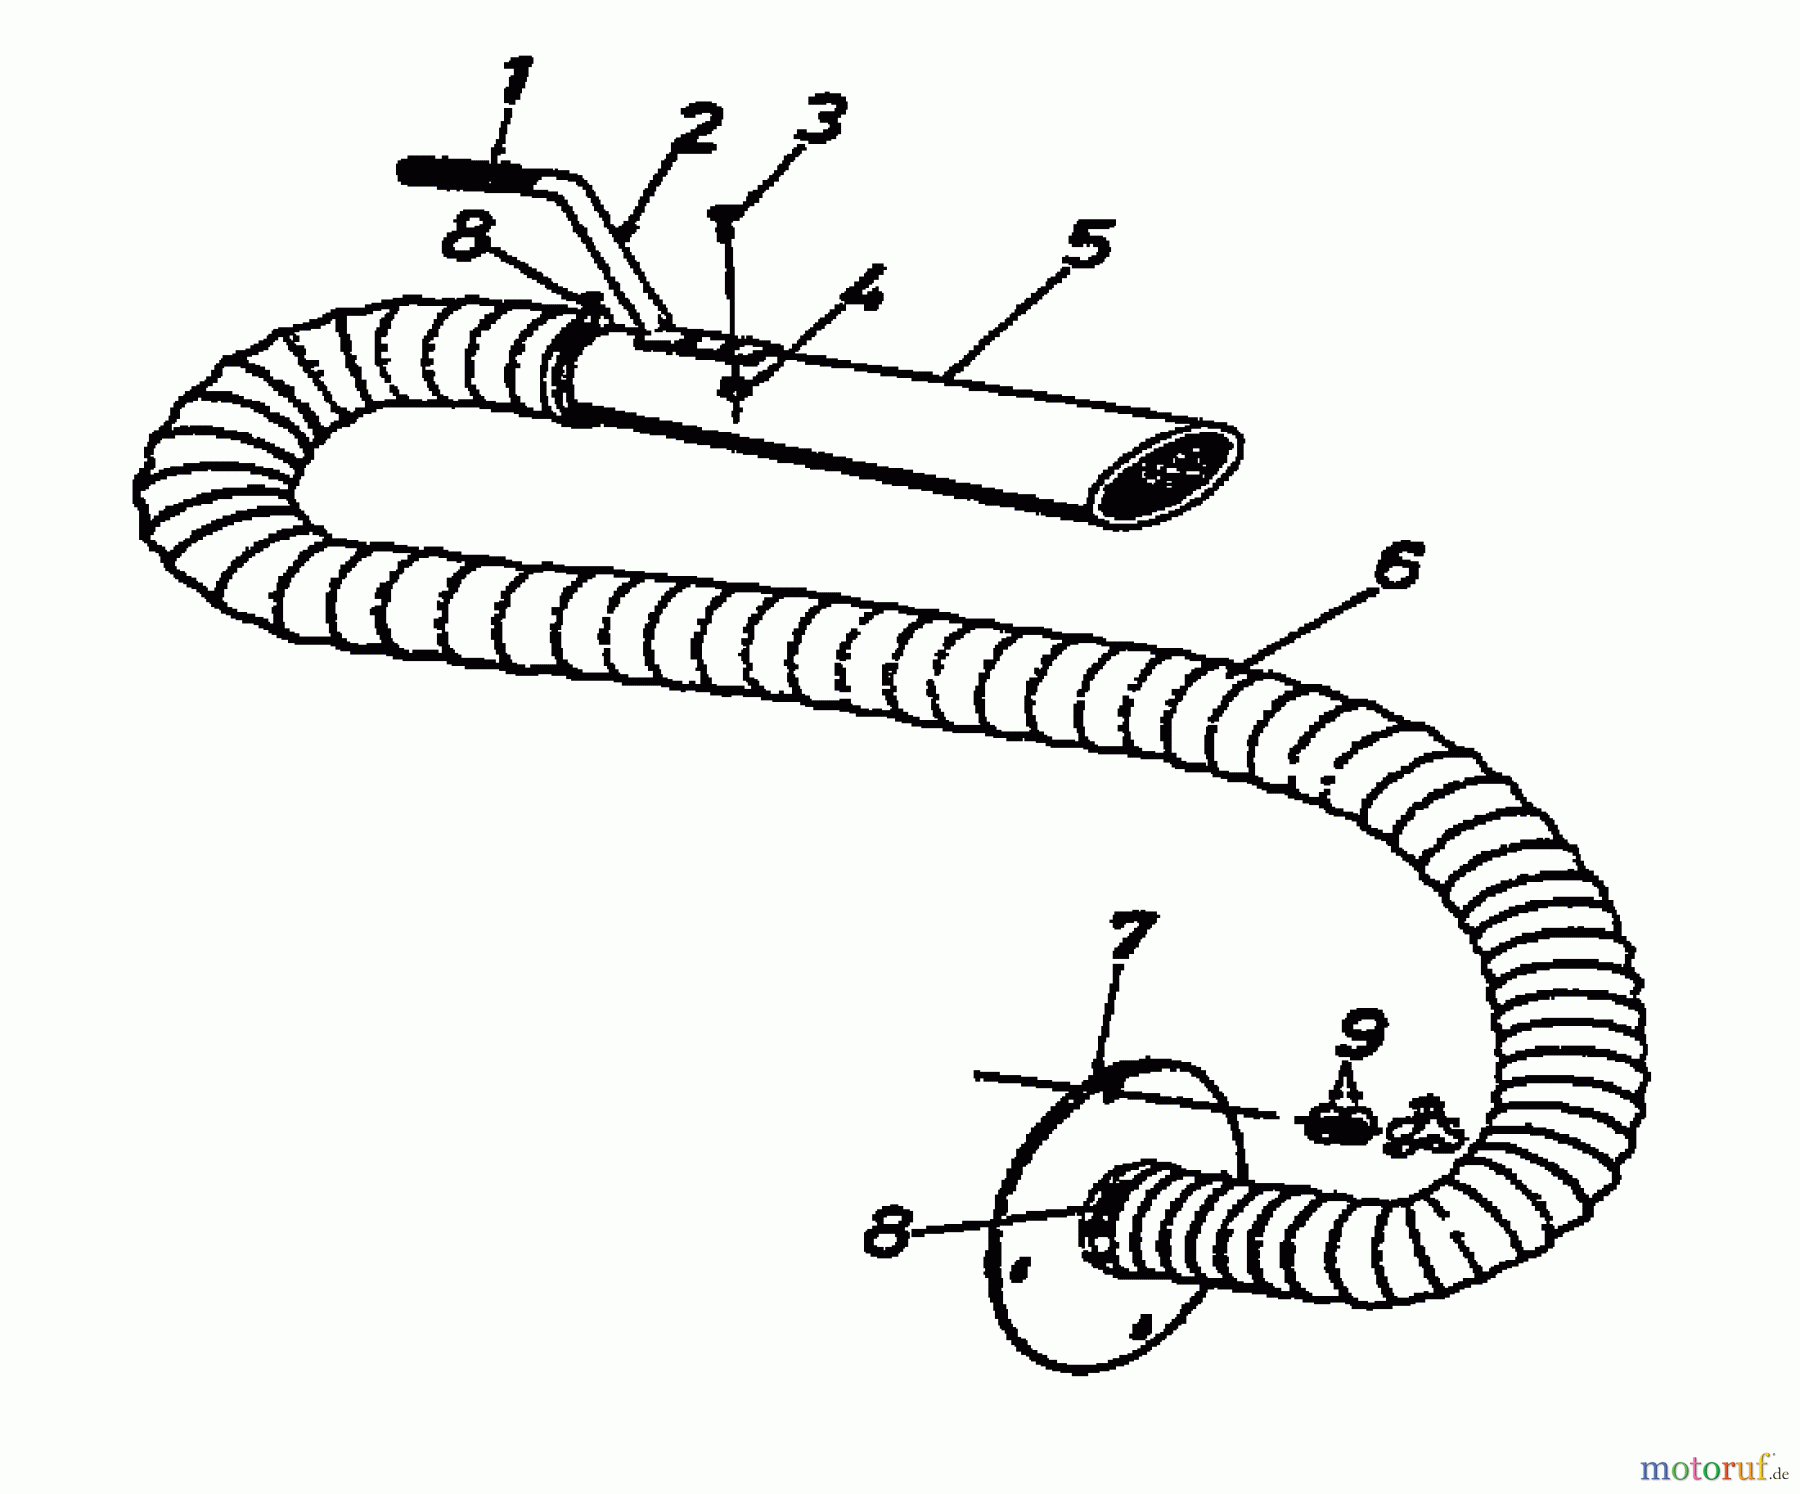  MTD Leaf blower, Blower vac 685 247-685-000  (1987) Vaccum hose